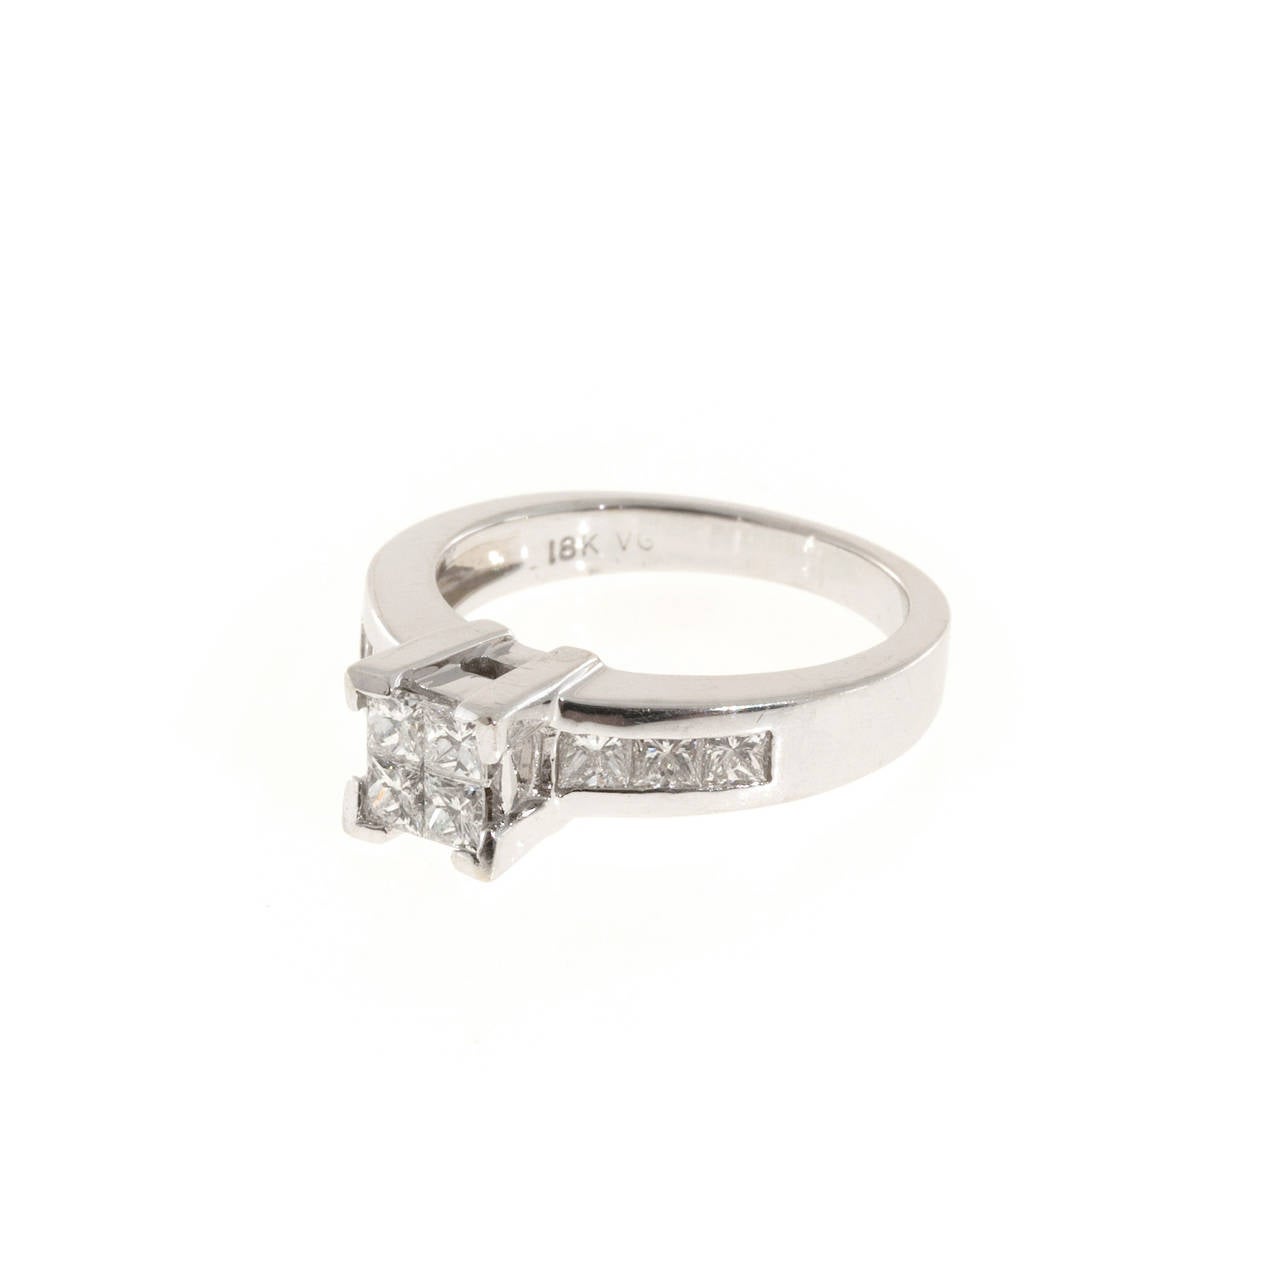 Women's 1.2 Carat Channel Set Diamond Gold Engagement Ring